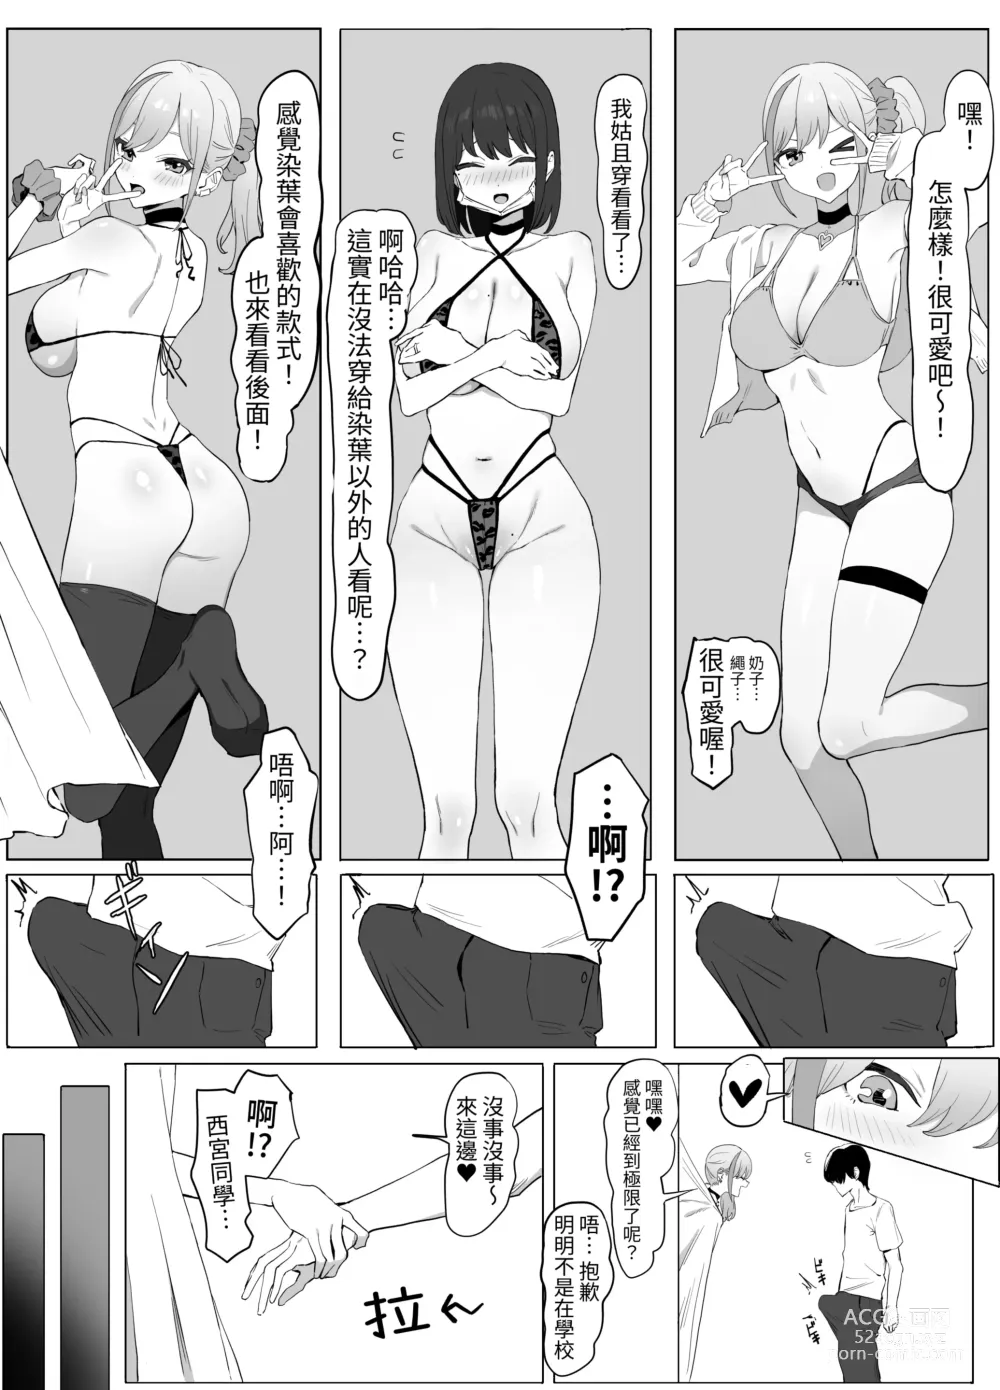 Page 5 of doujinshi Seikoui Jisshuu 2